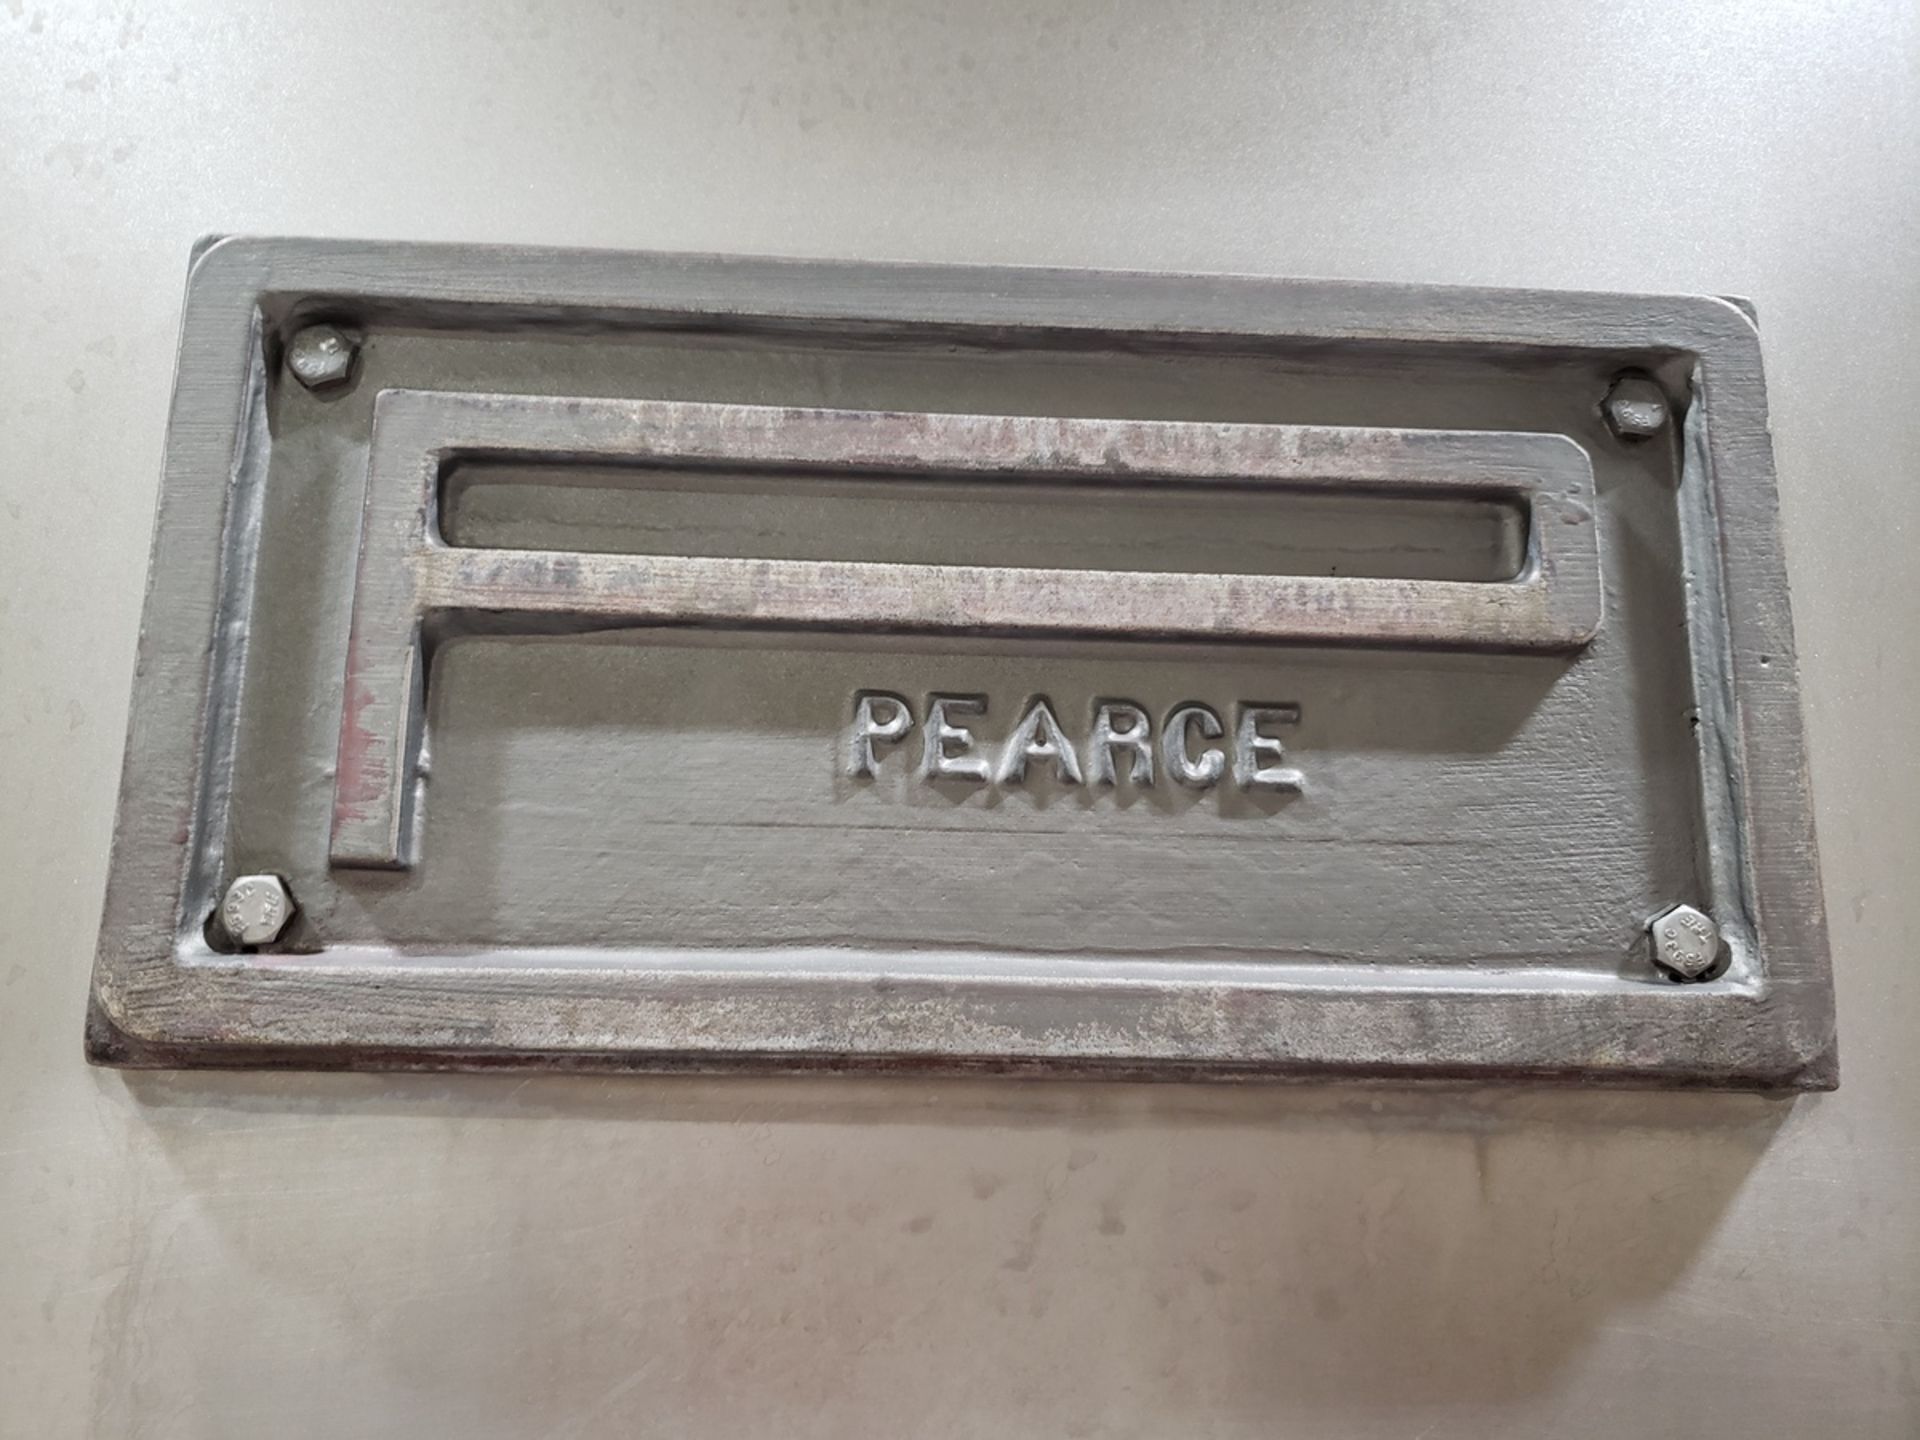 Pearce 150 Ton Hydraulic Block Press, M# HCT-150, S/N 94T4829 - Subj to Bulk | Rig Fee: $5500 - Image 2 of 8